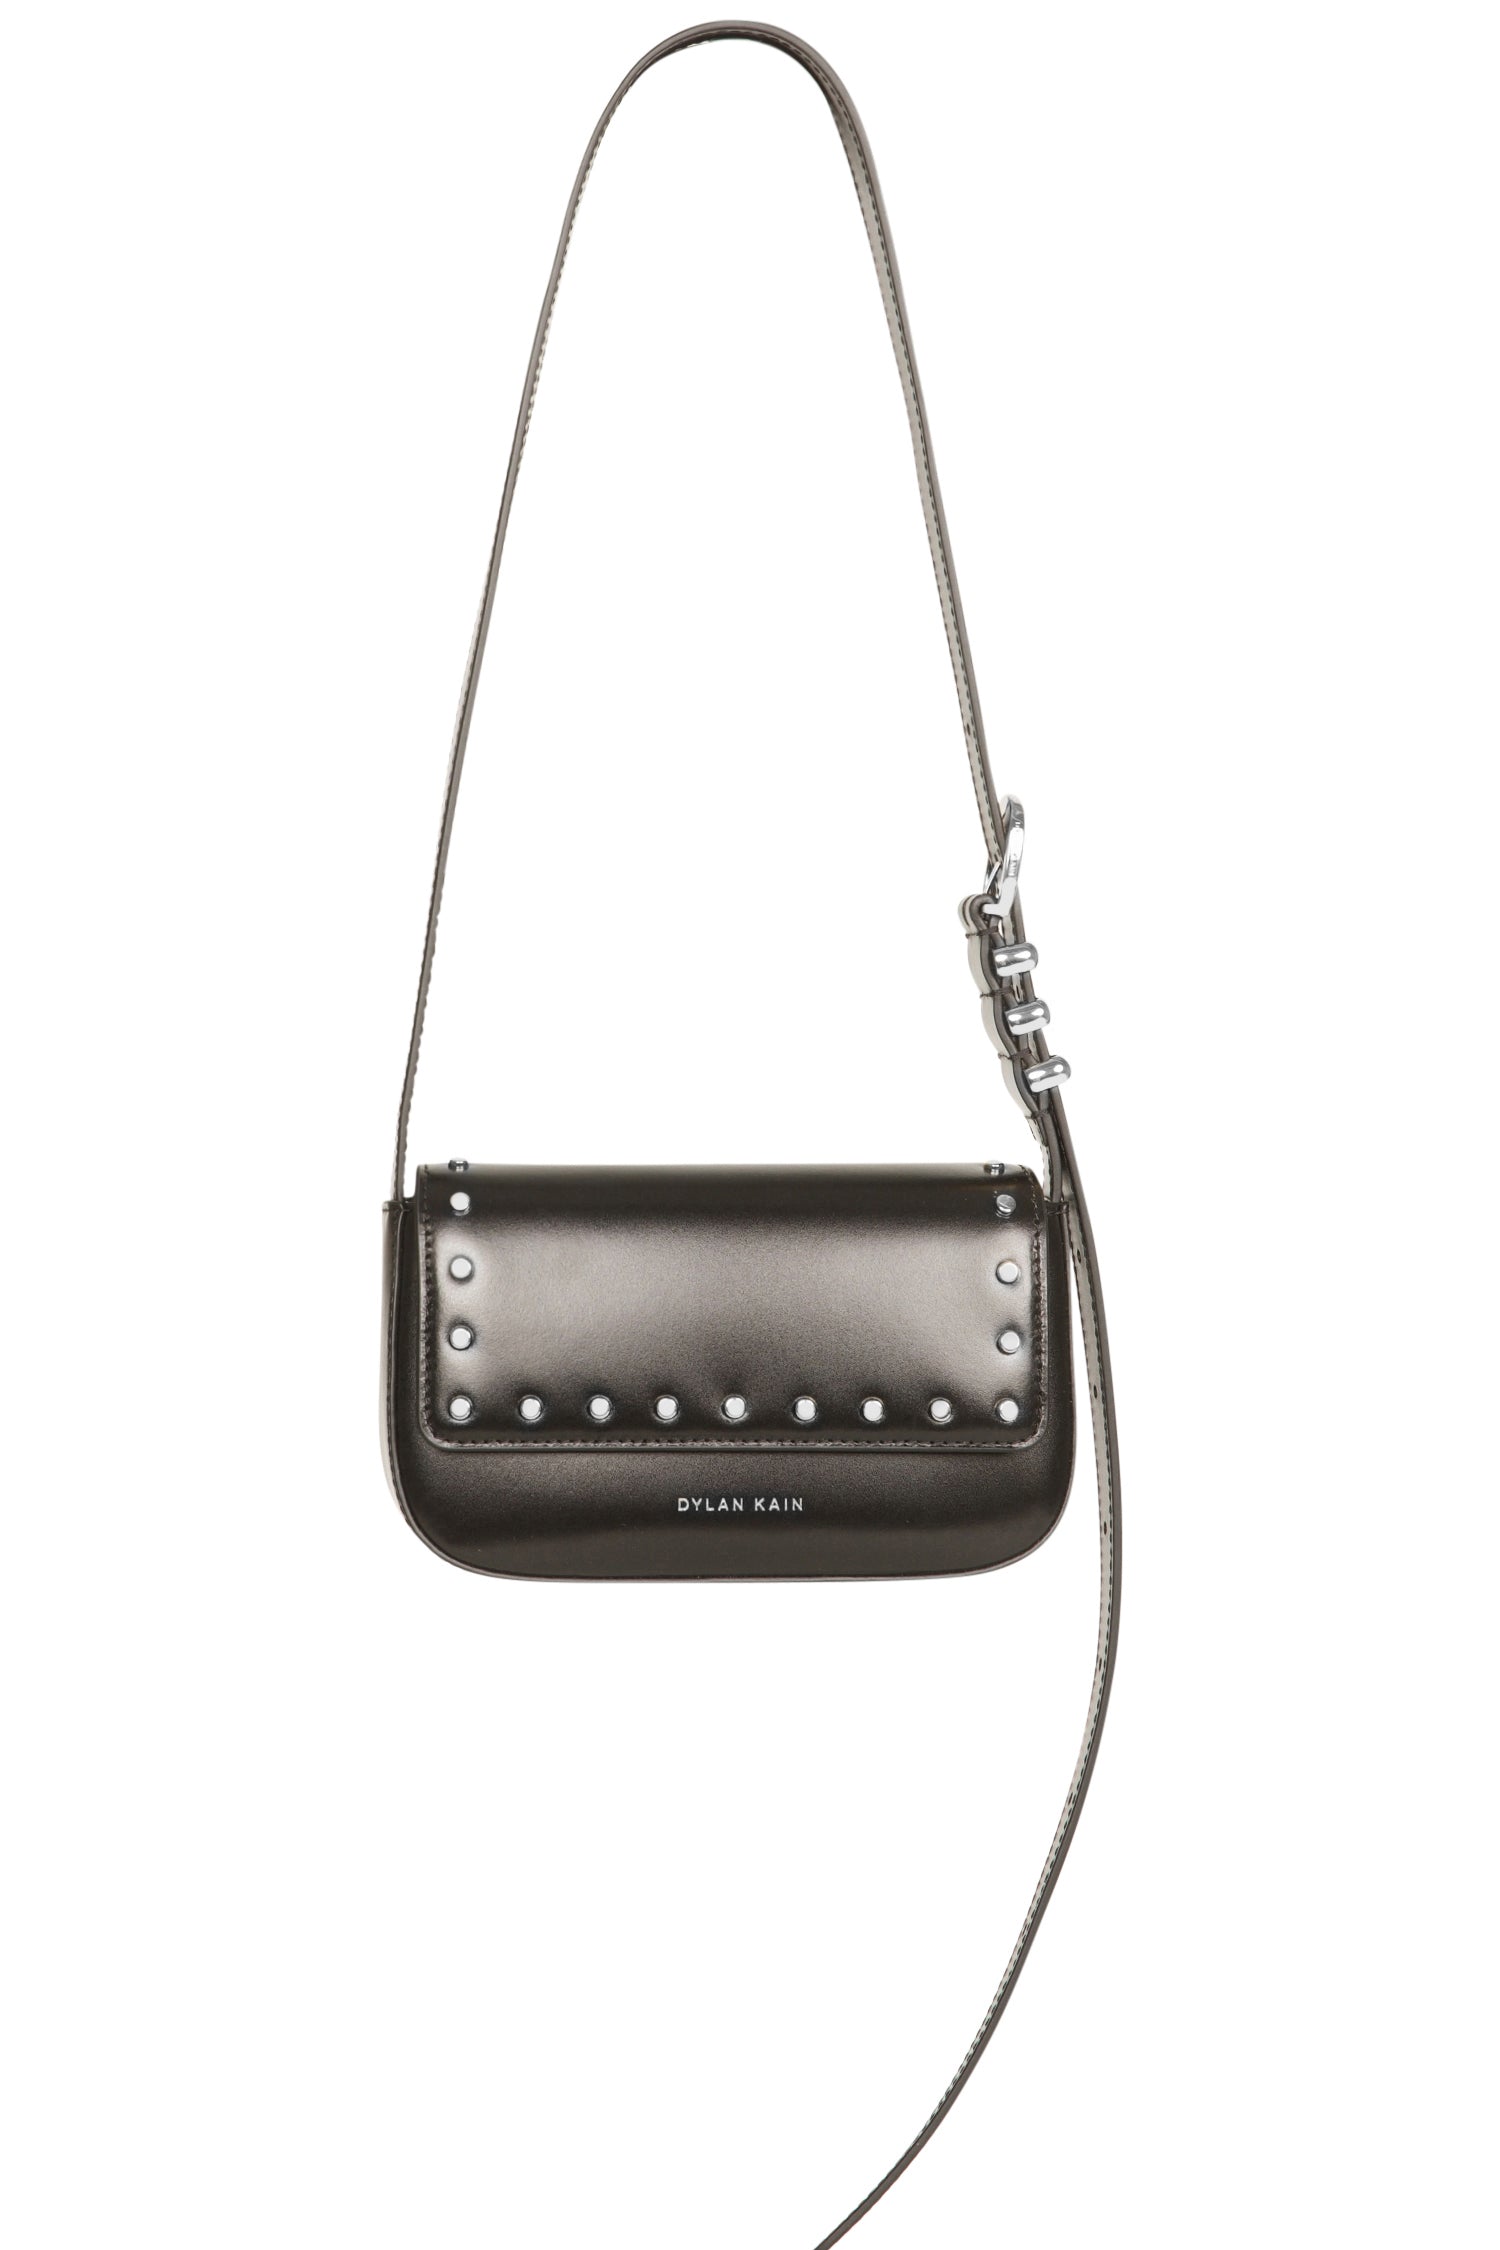 SAMPLE - The Delilah Bag Studded Bag Silver